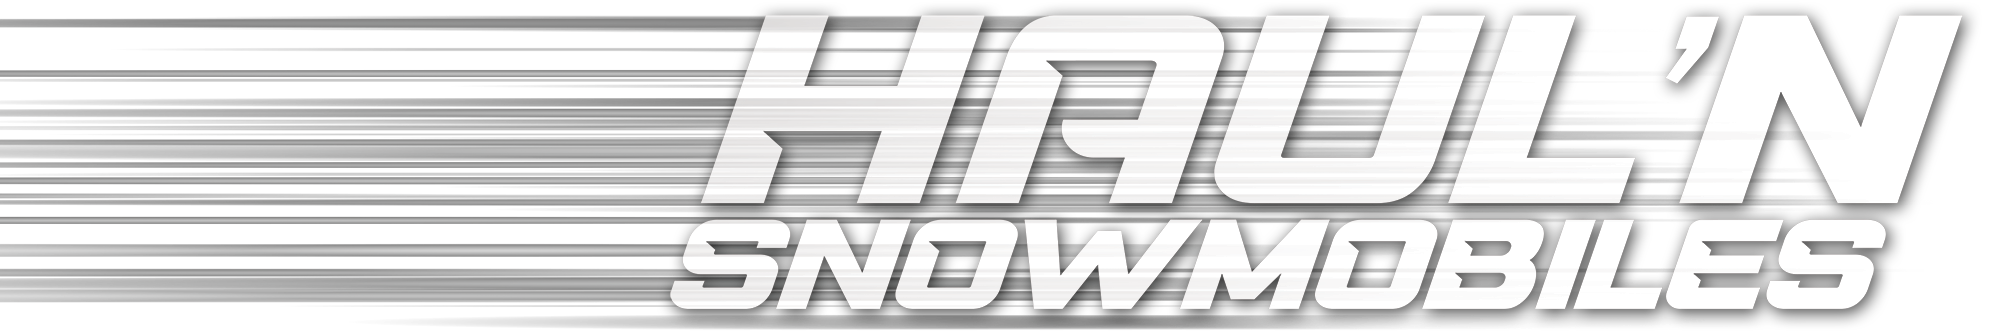 Haul'n Snowmobiles typography